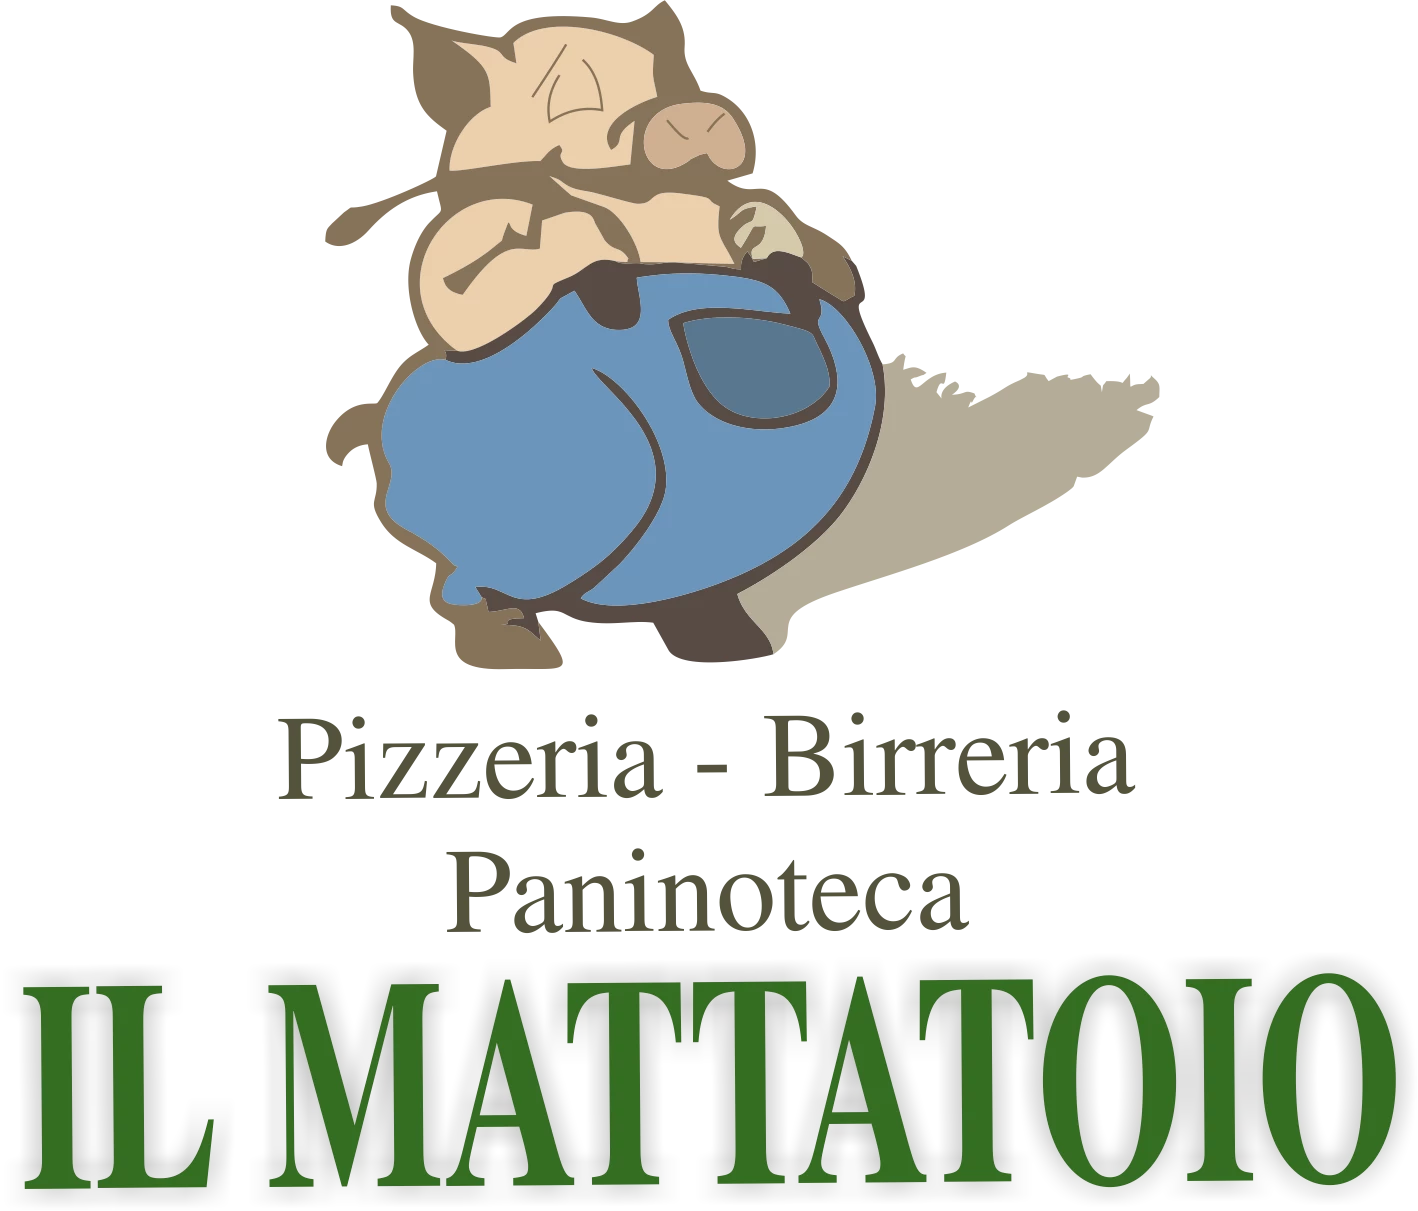 Il Mattatoio pizzeria,birreria,paninoteca